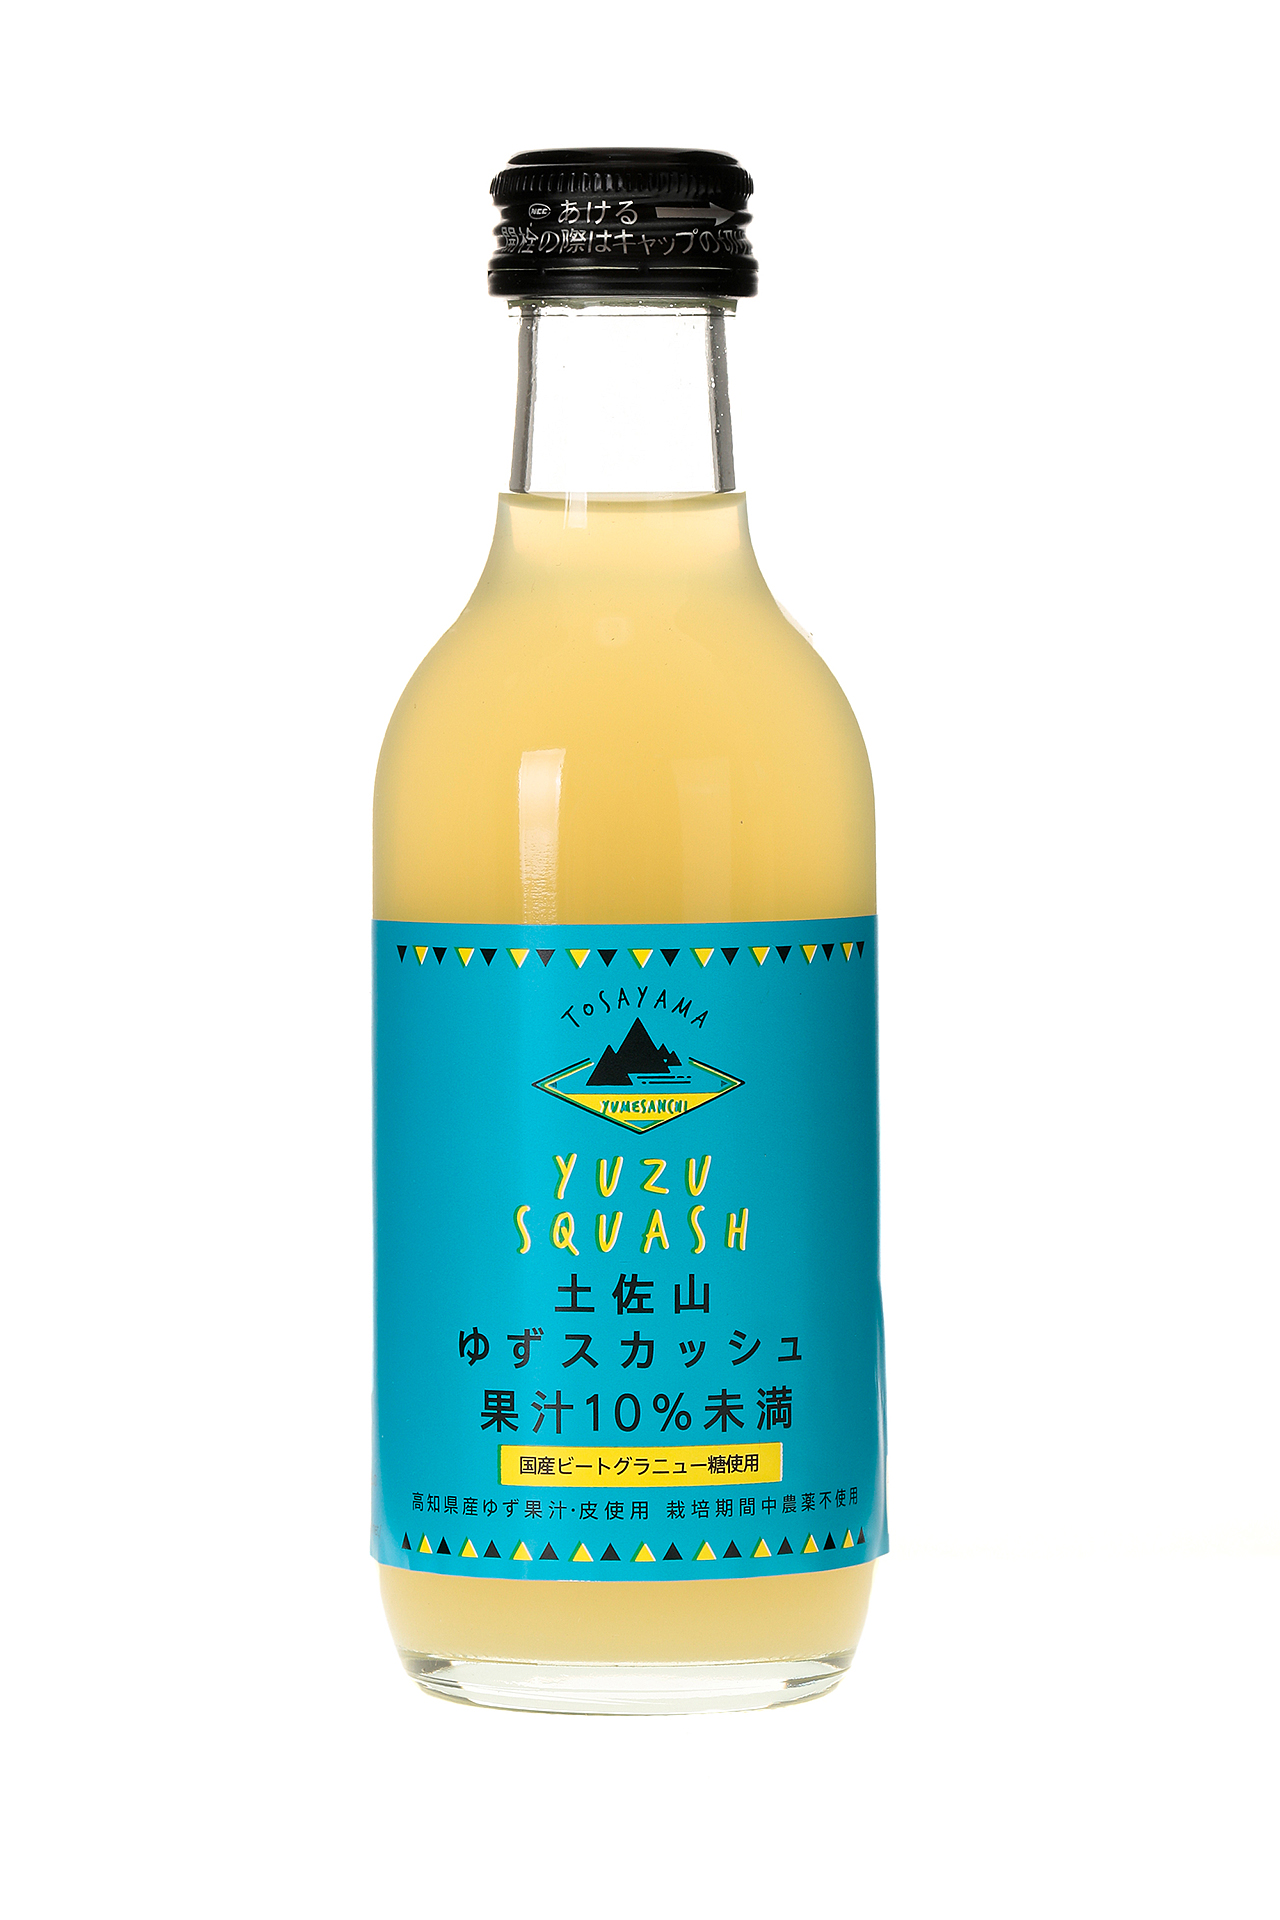 Tosayama Yuzu Squash Drink M